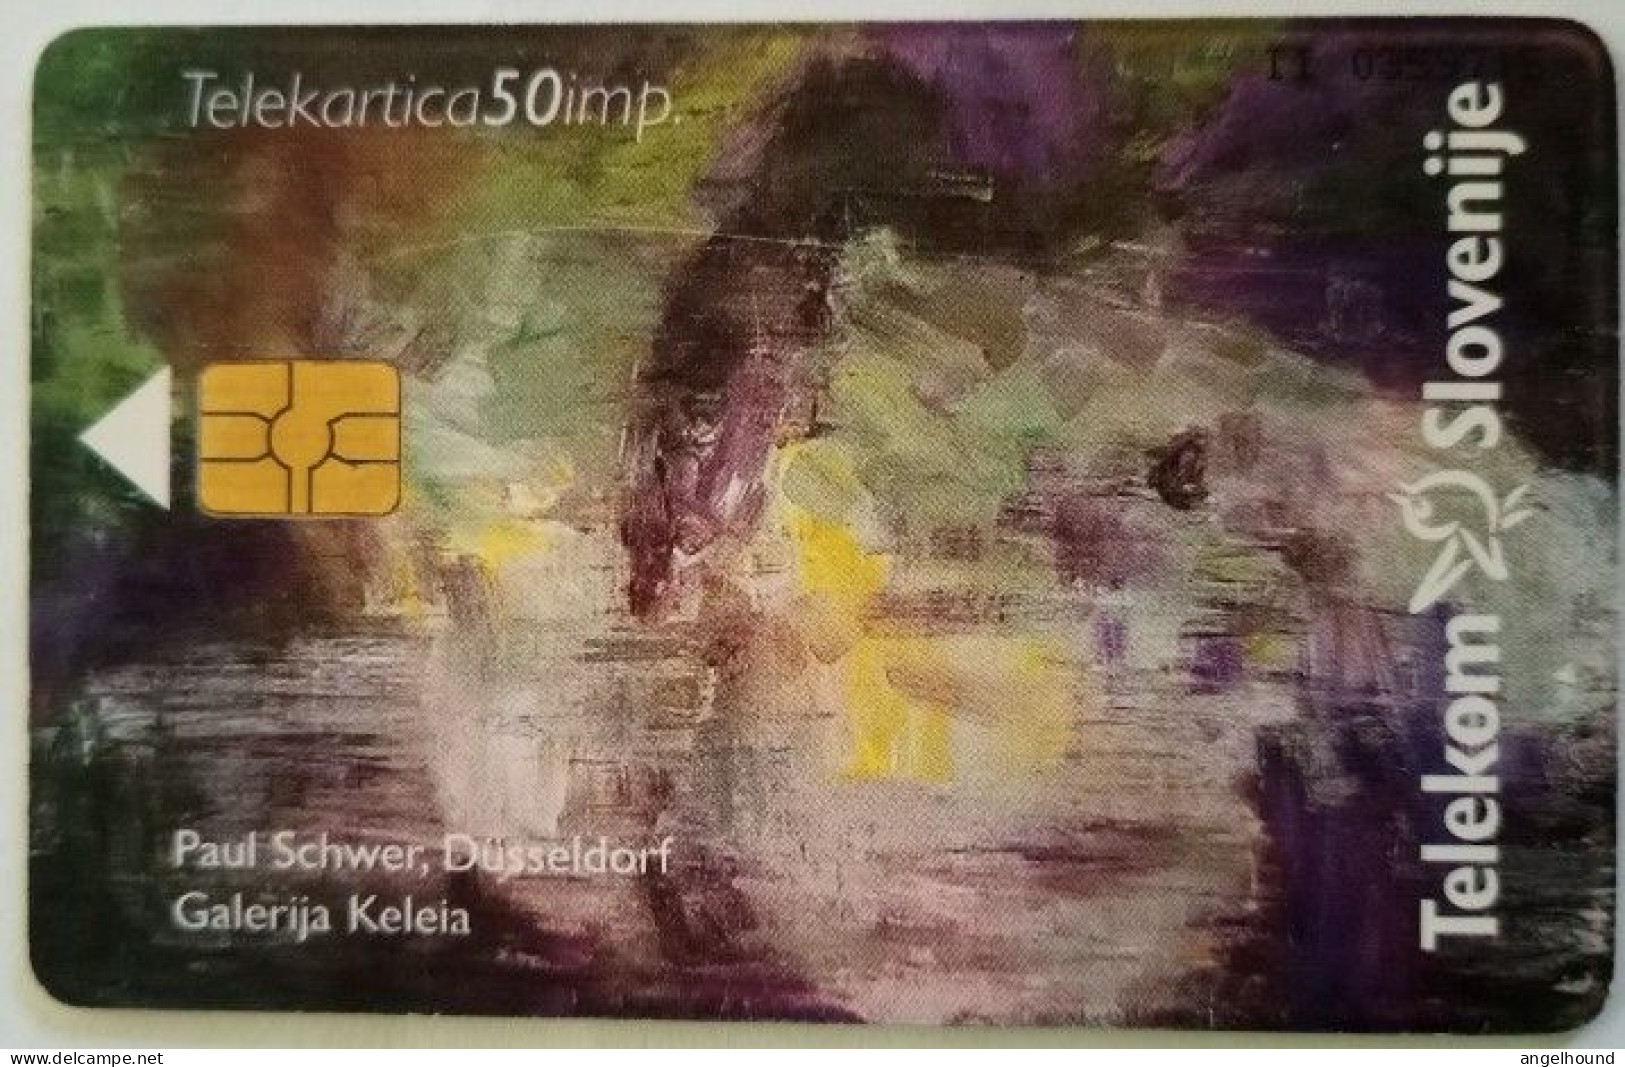 Slovenia 50 Unit Chip Card - Paul Schwer / Dusseldorf Galerija Kelera / Zdruzenje Sloven - Eslovenia